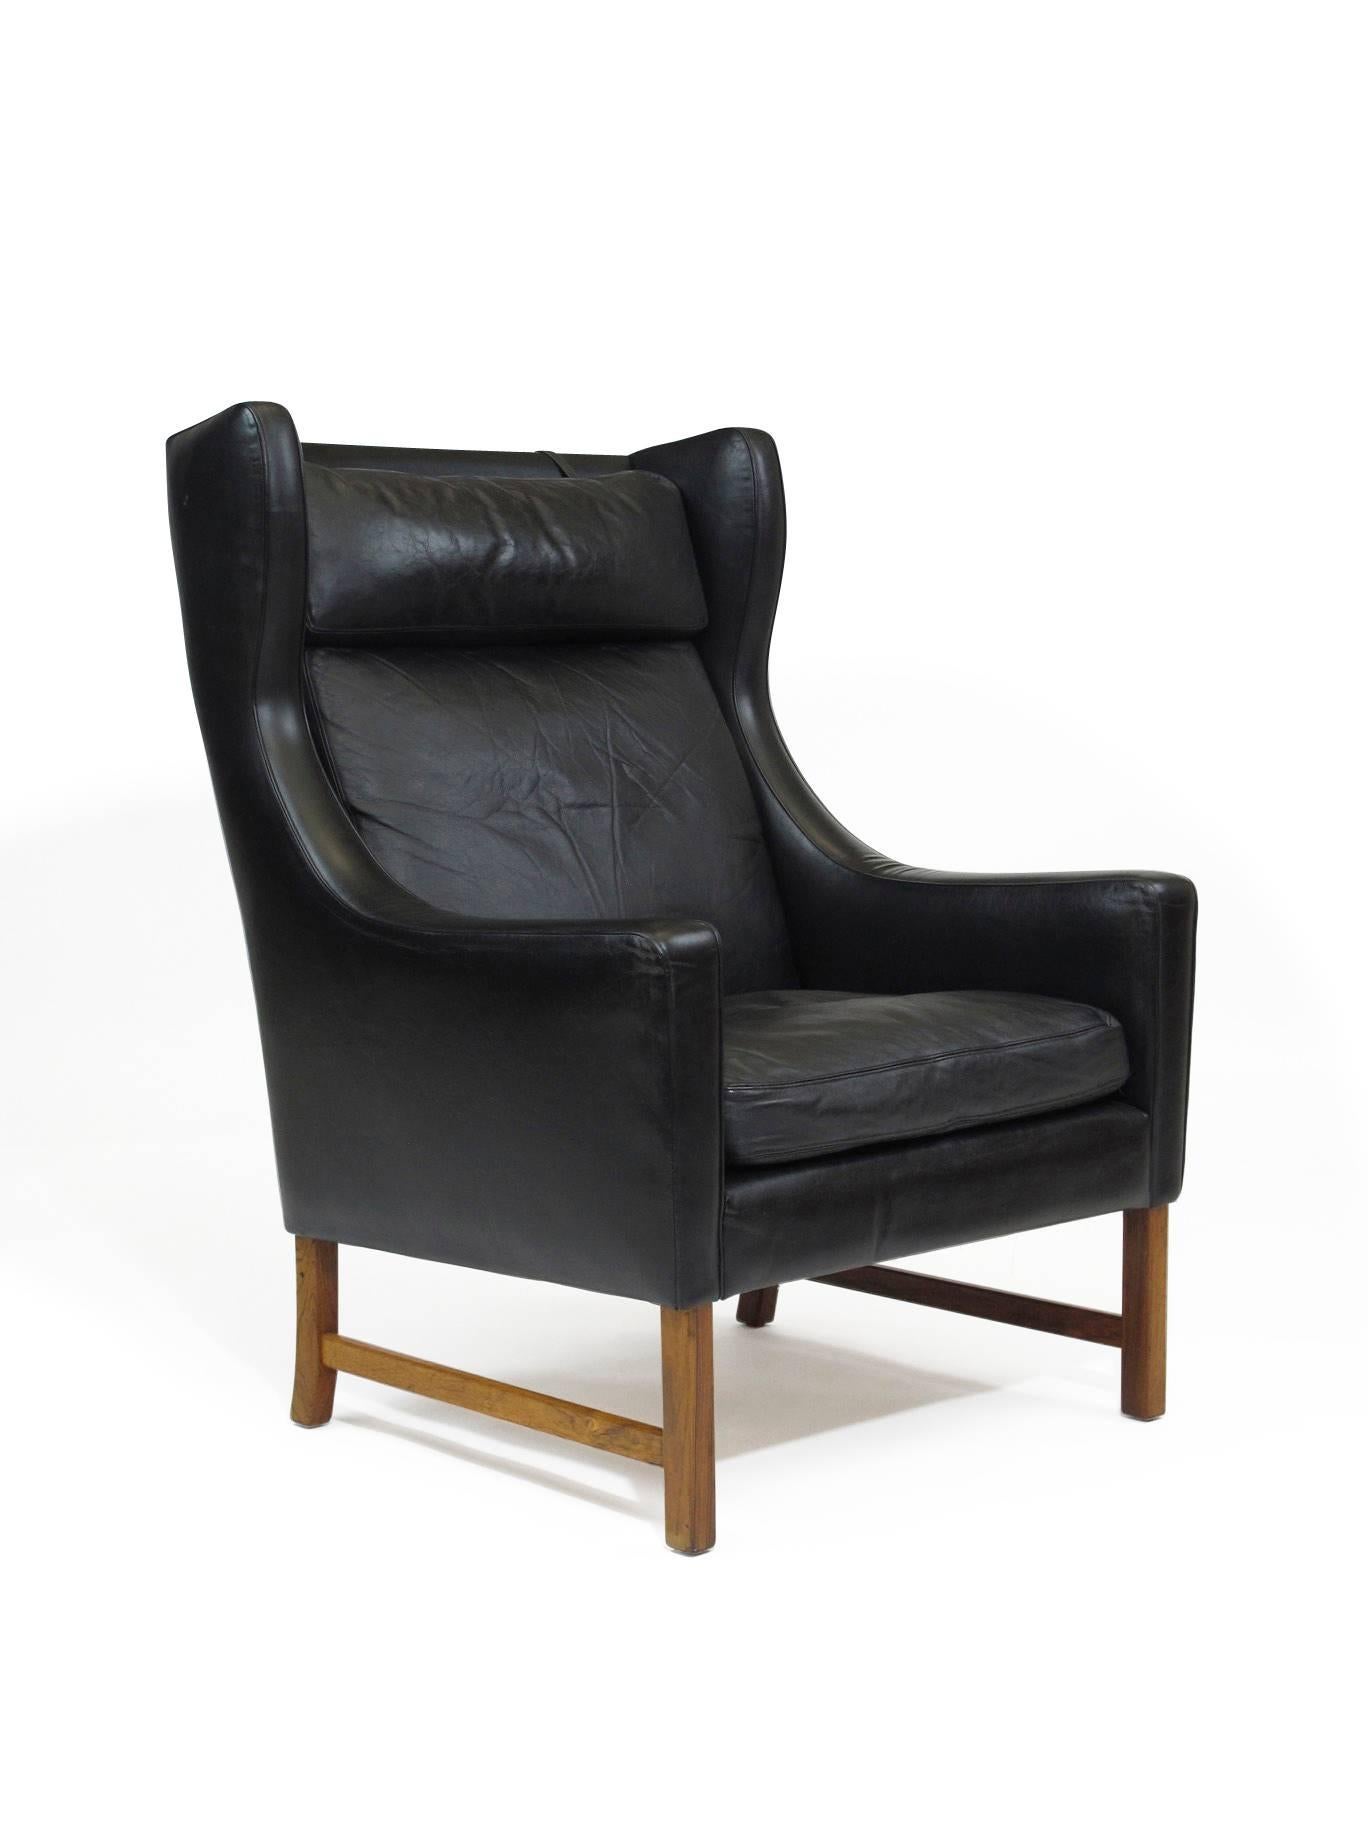 Scandinavian Modern Fredrik Kayser Rosewood and Black Leather High-Back Danish Lounge Chair